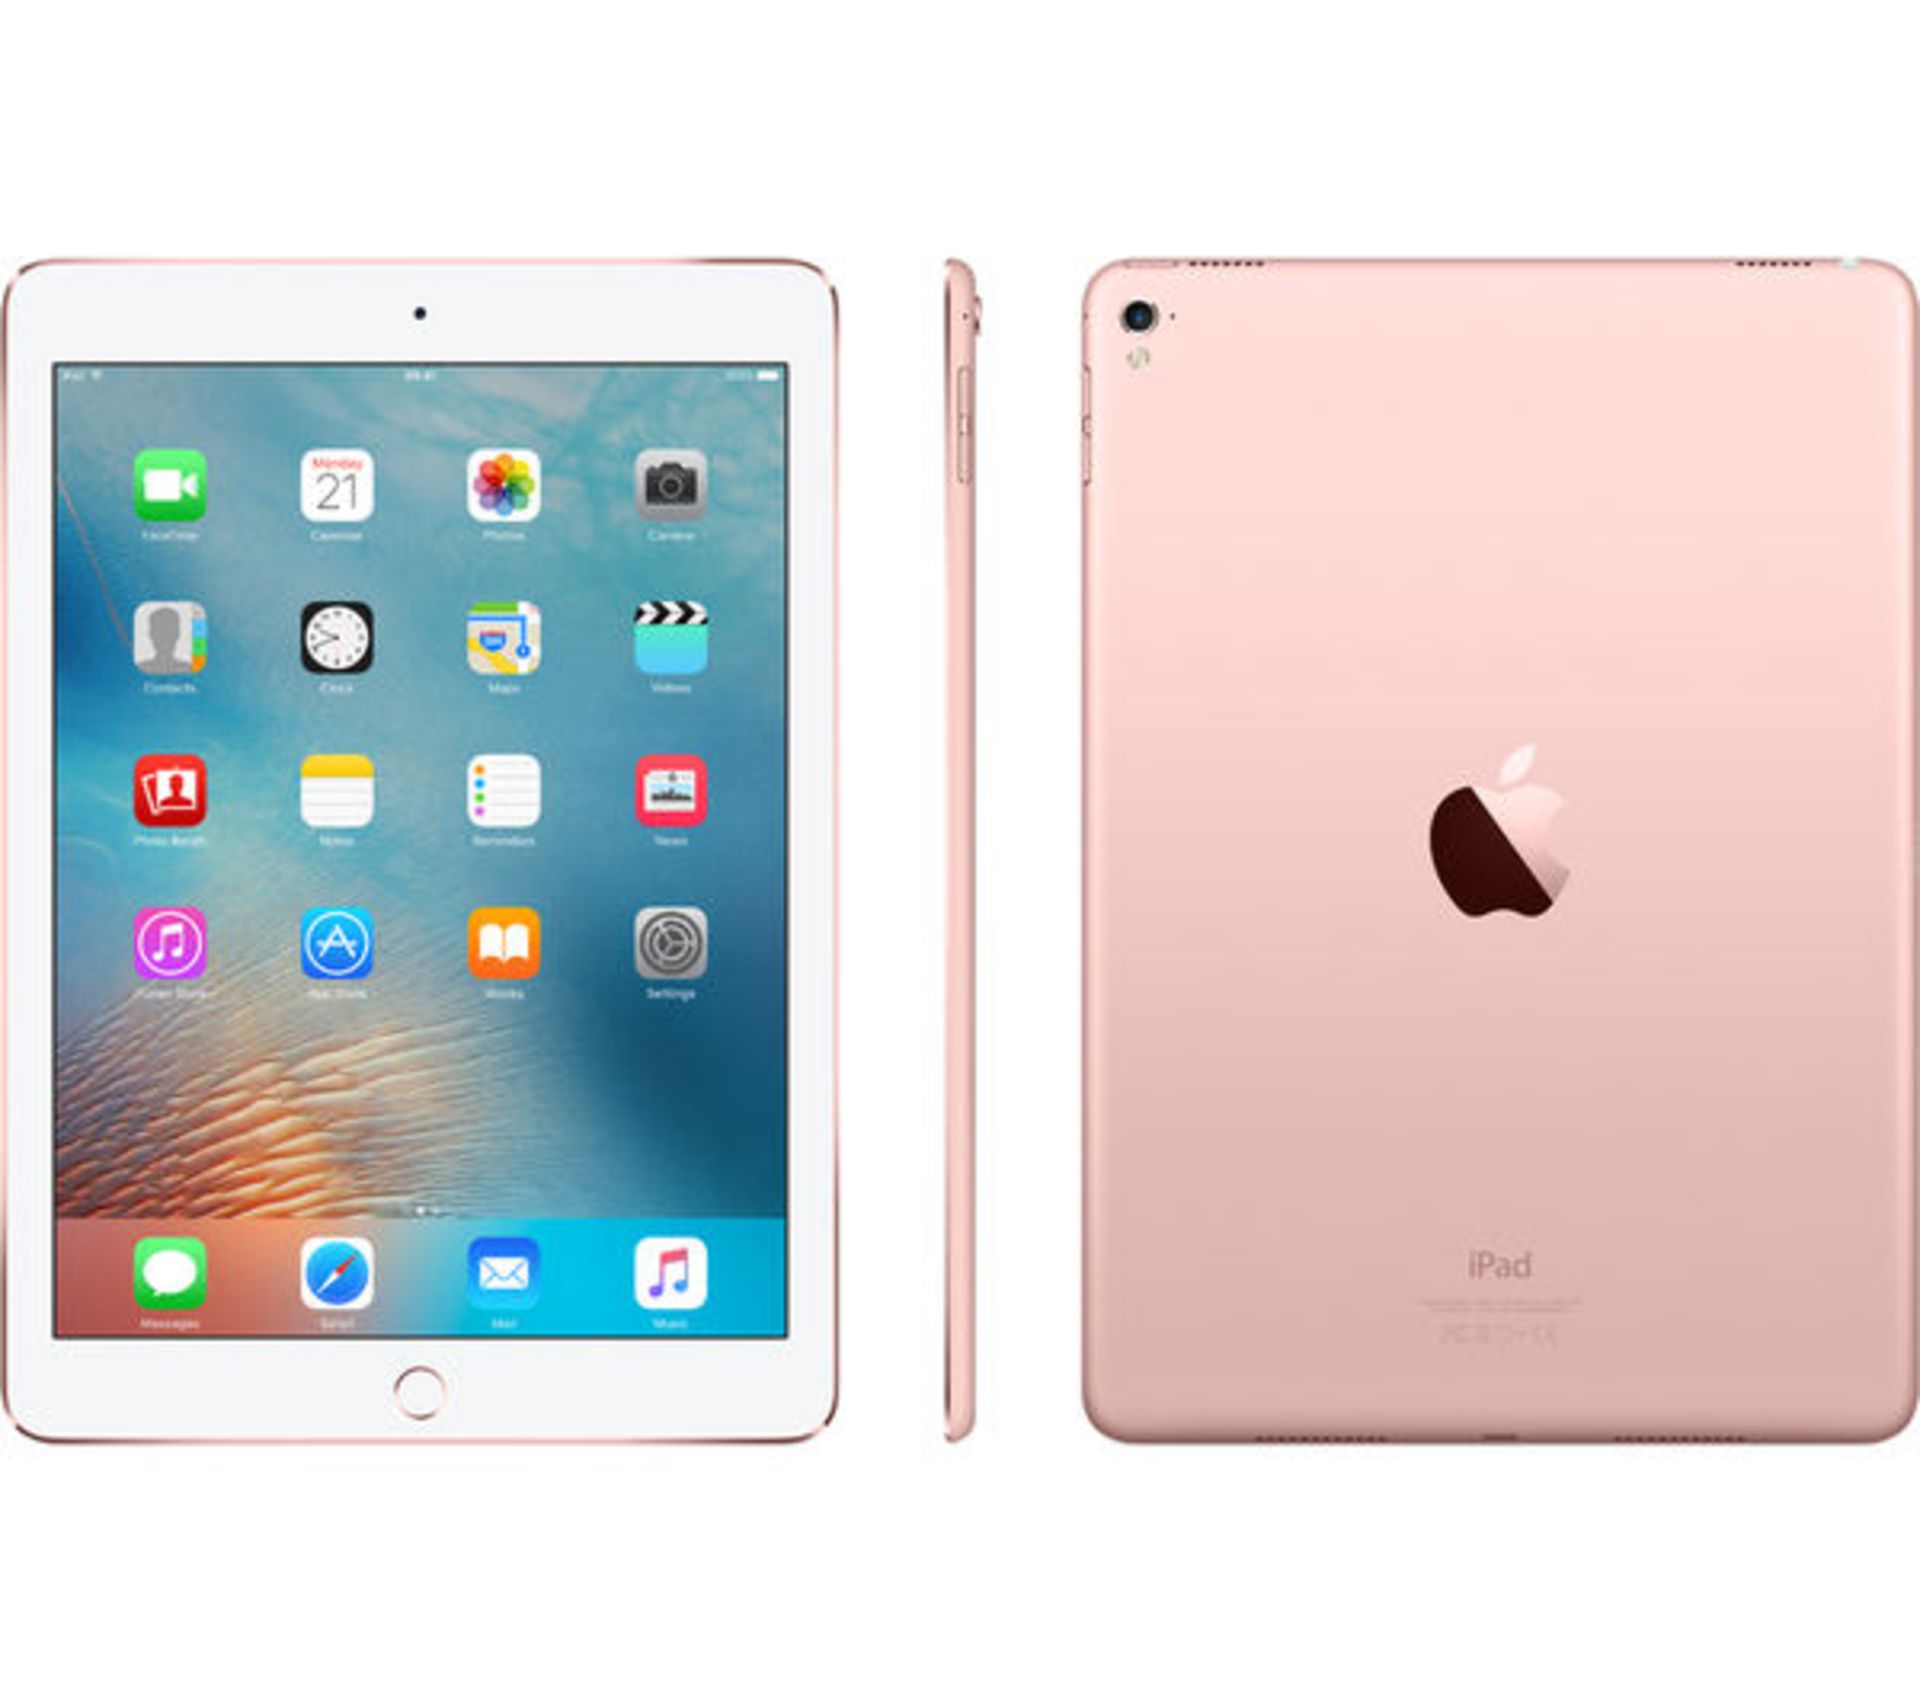 V *TRADE QTY* Grade B Apple iPad Pro 9.7" 32GB Rose Gold - Wi-Fi - In Apple Box With Apple